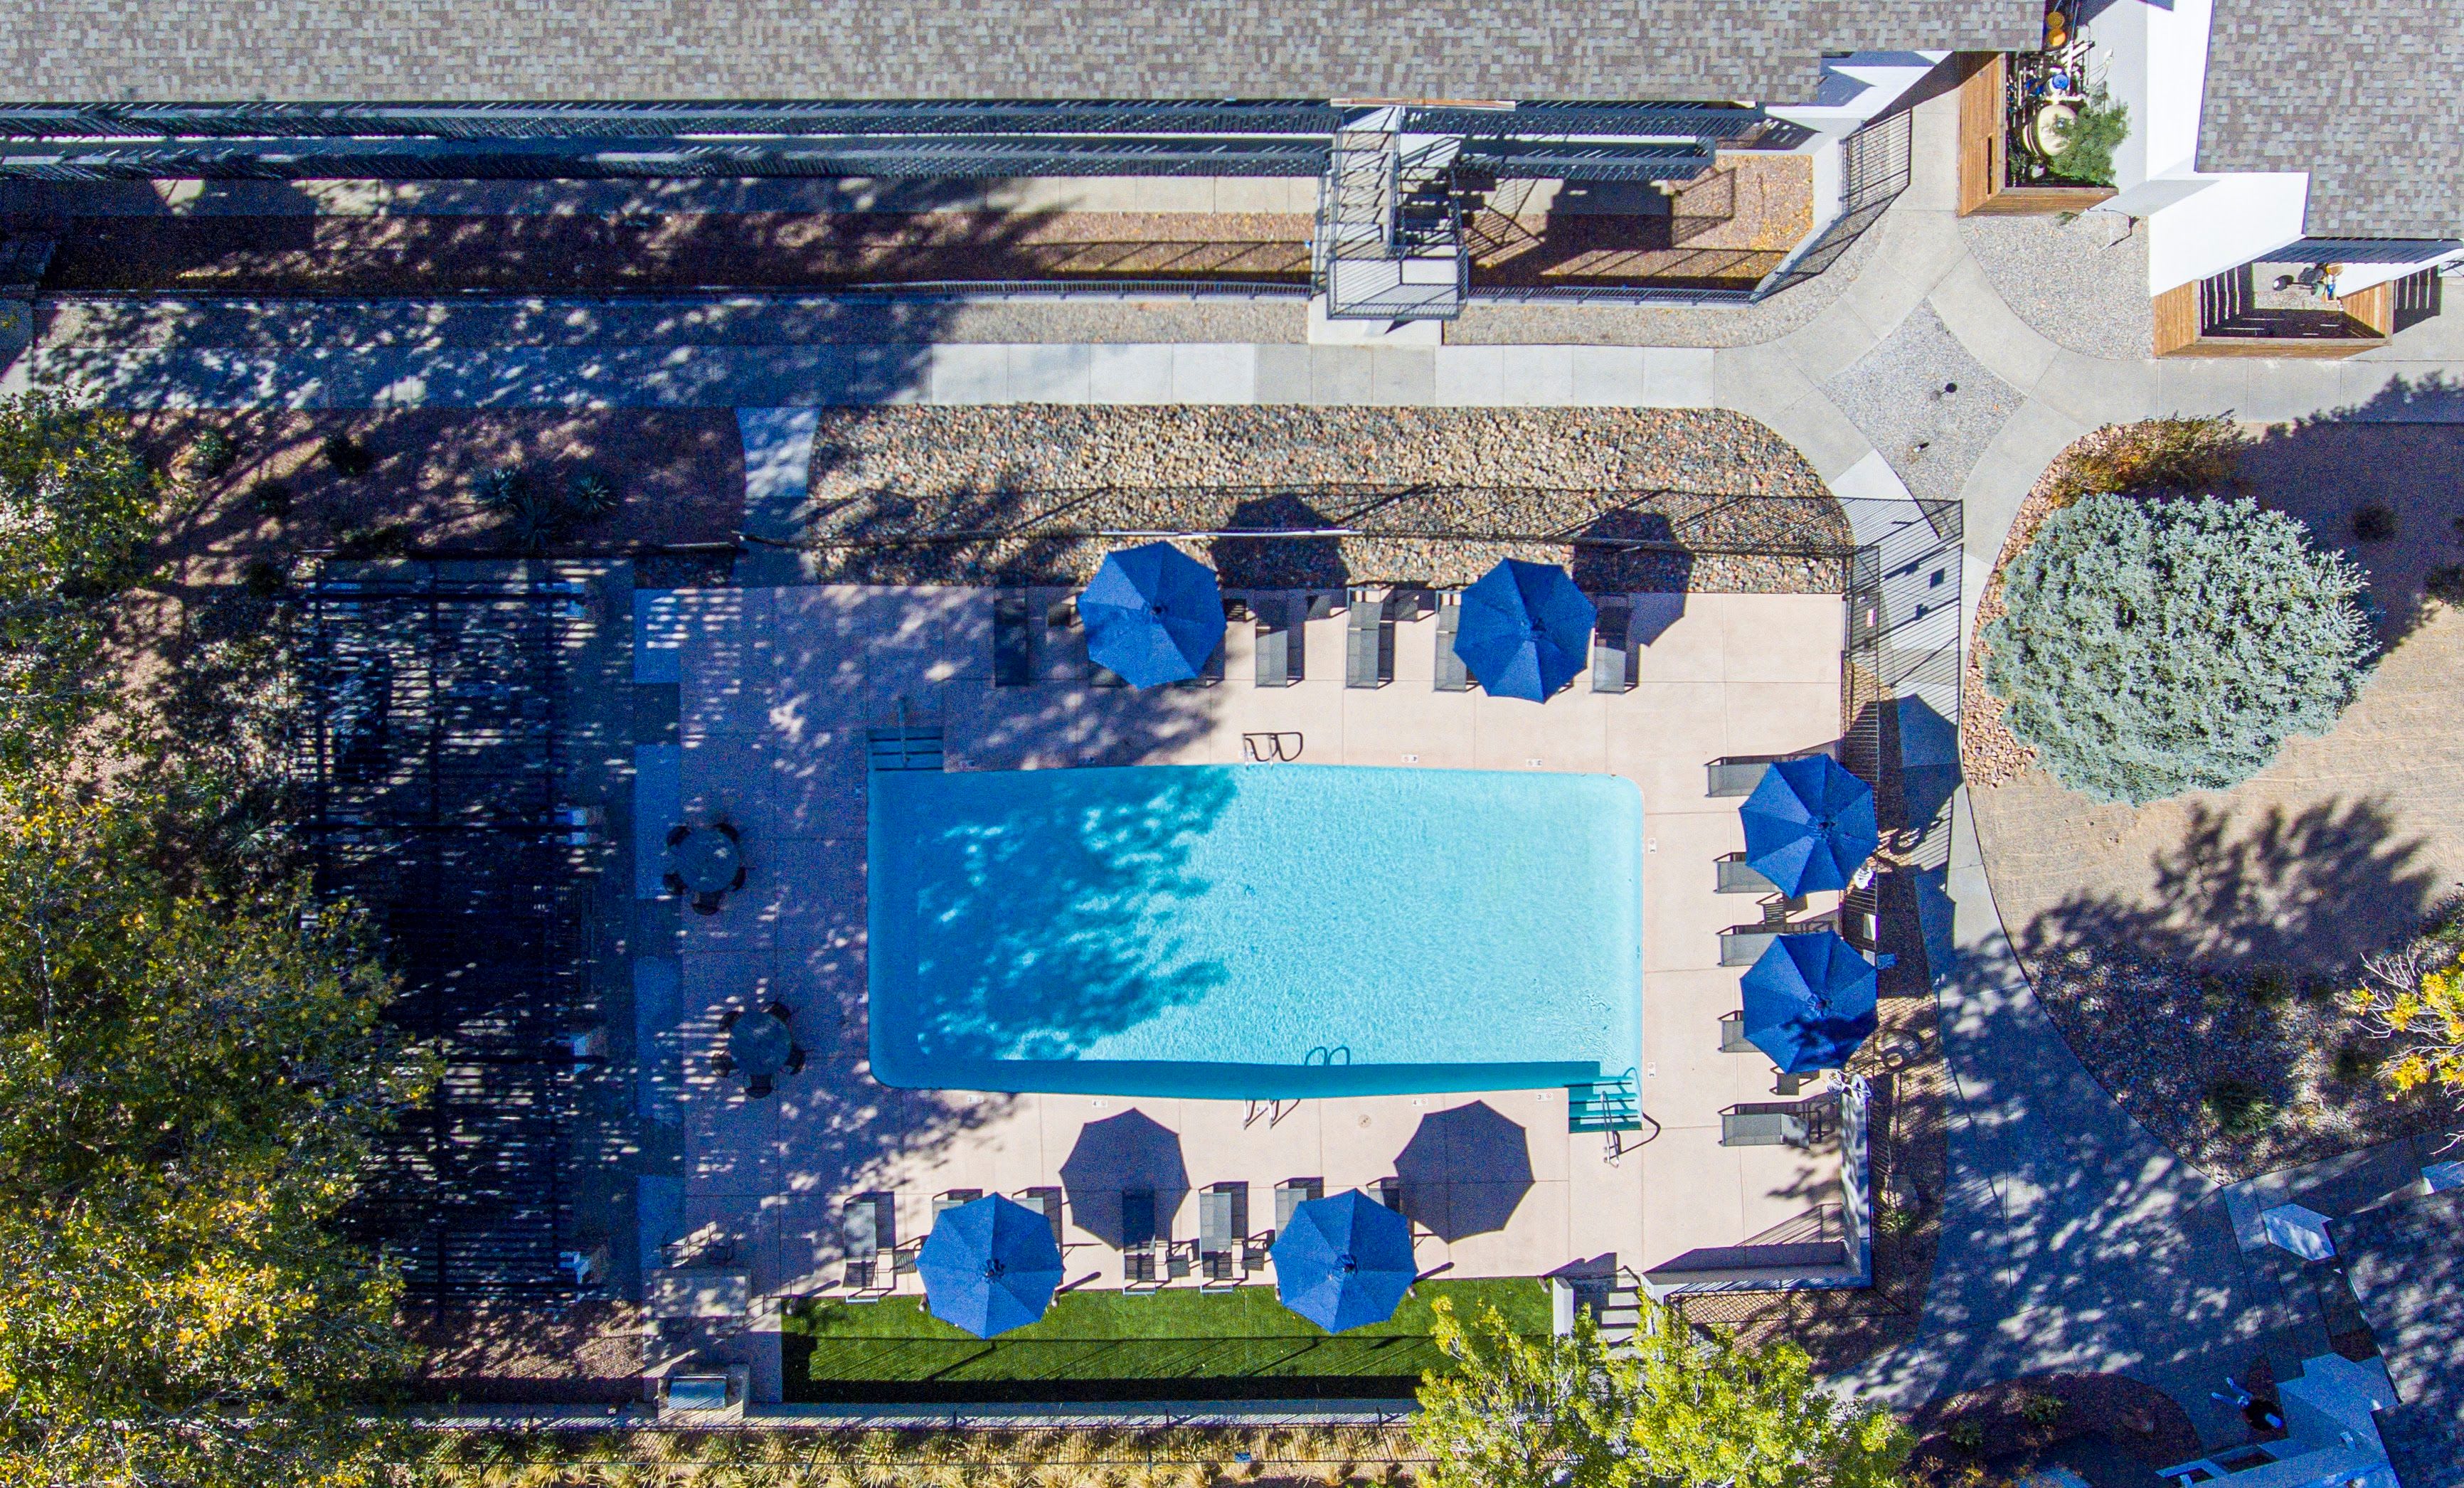 Aerial view of pool with blue umbrellas at  Montecito in Albuquerque, New Mexico